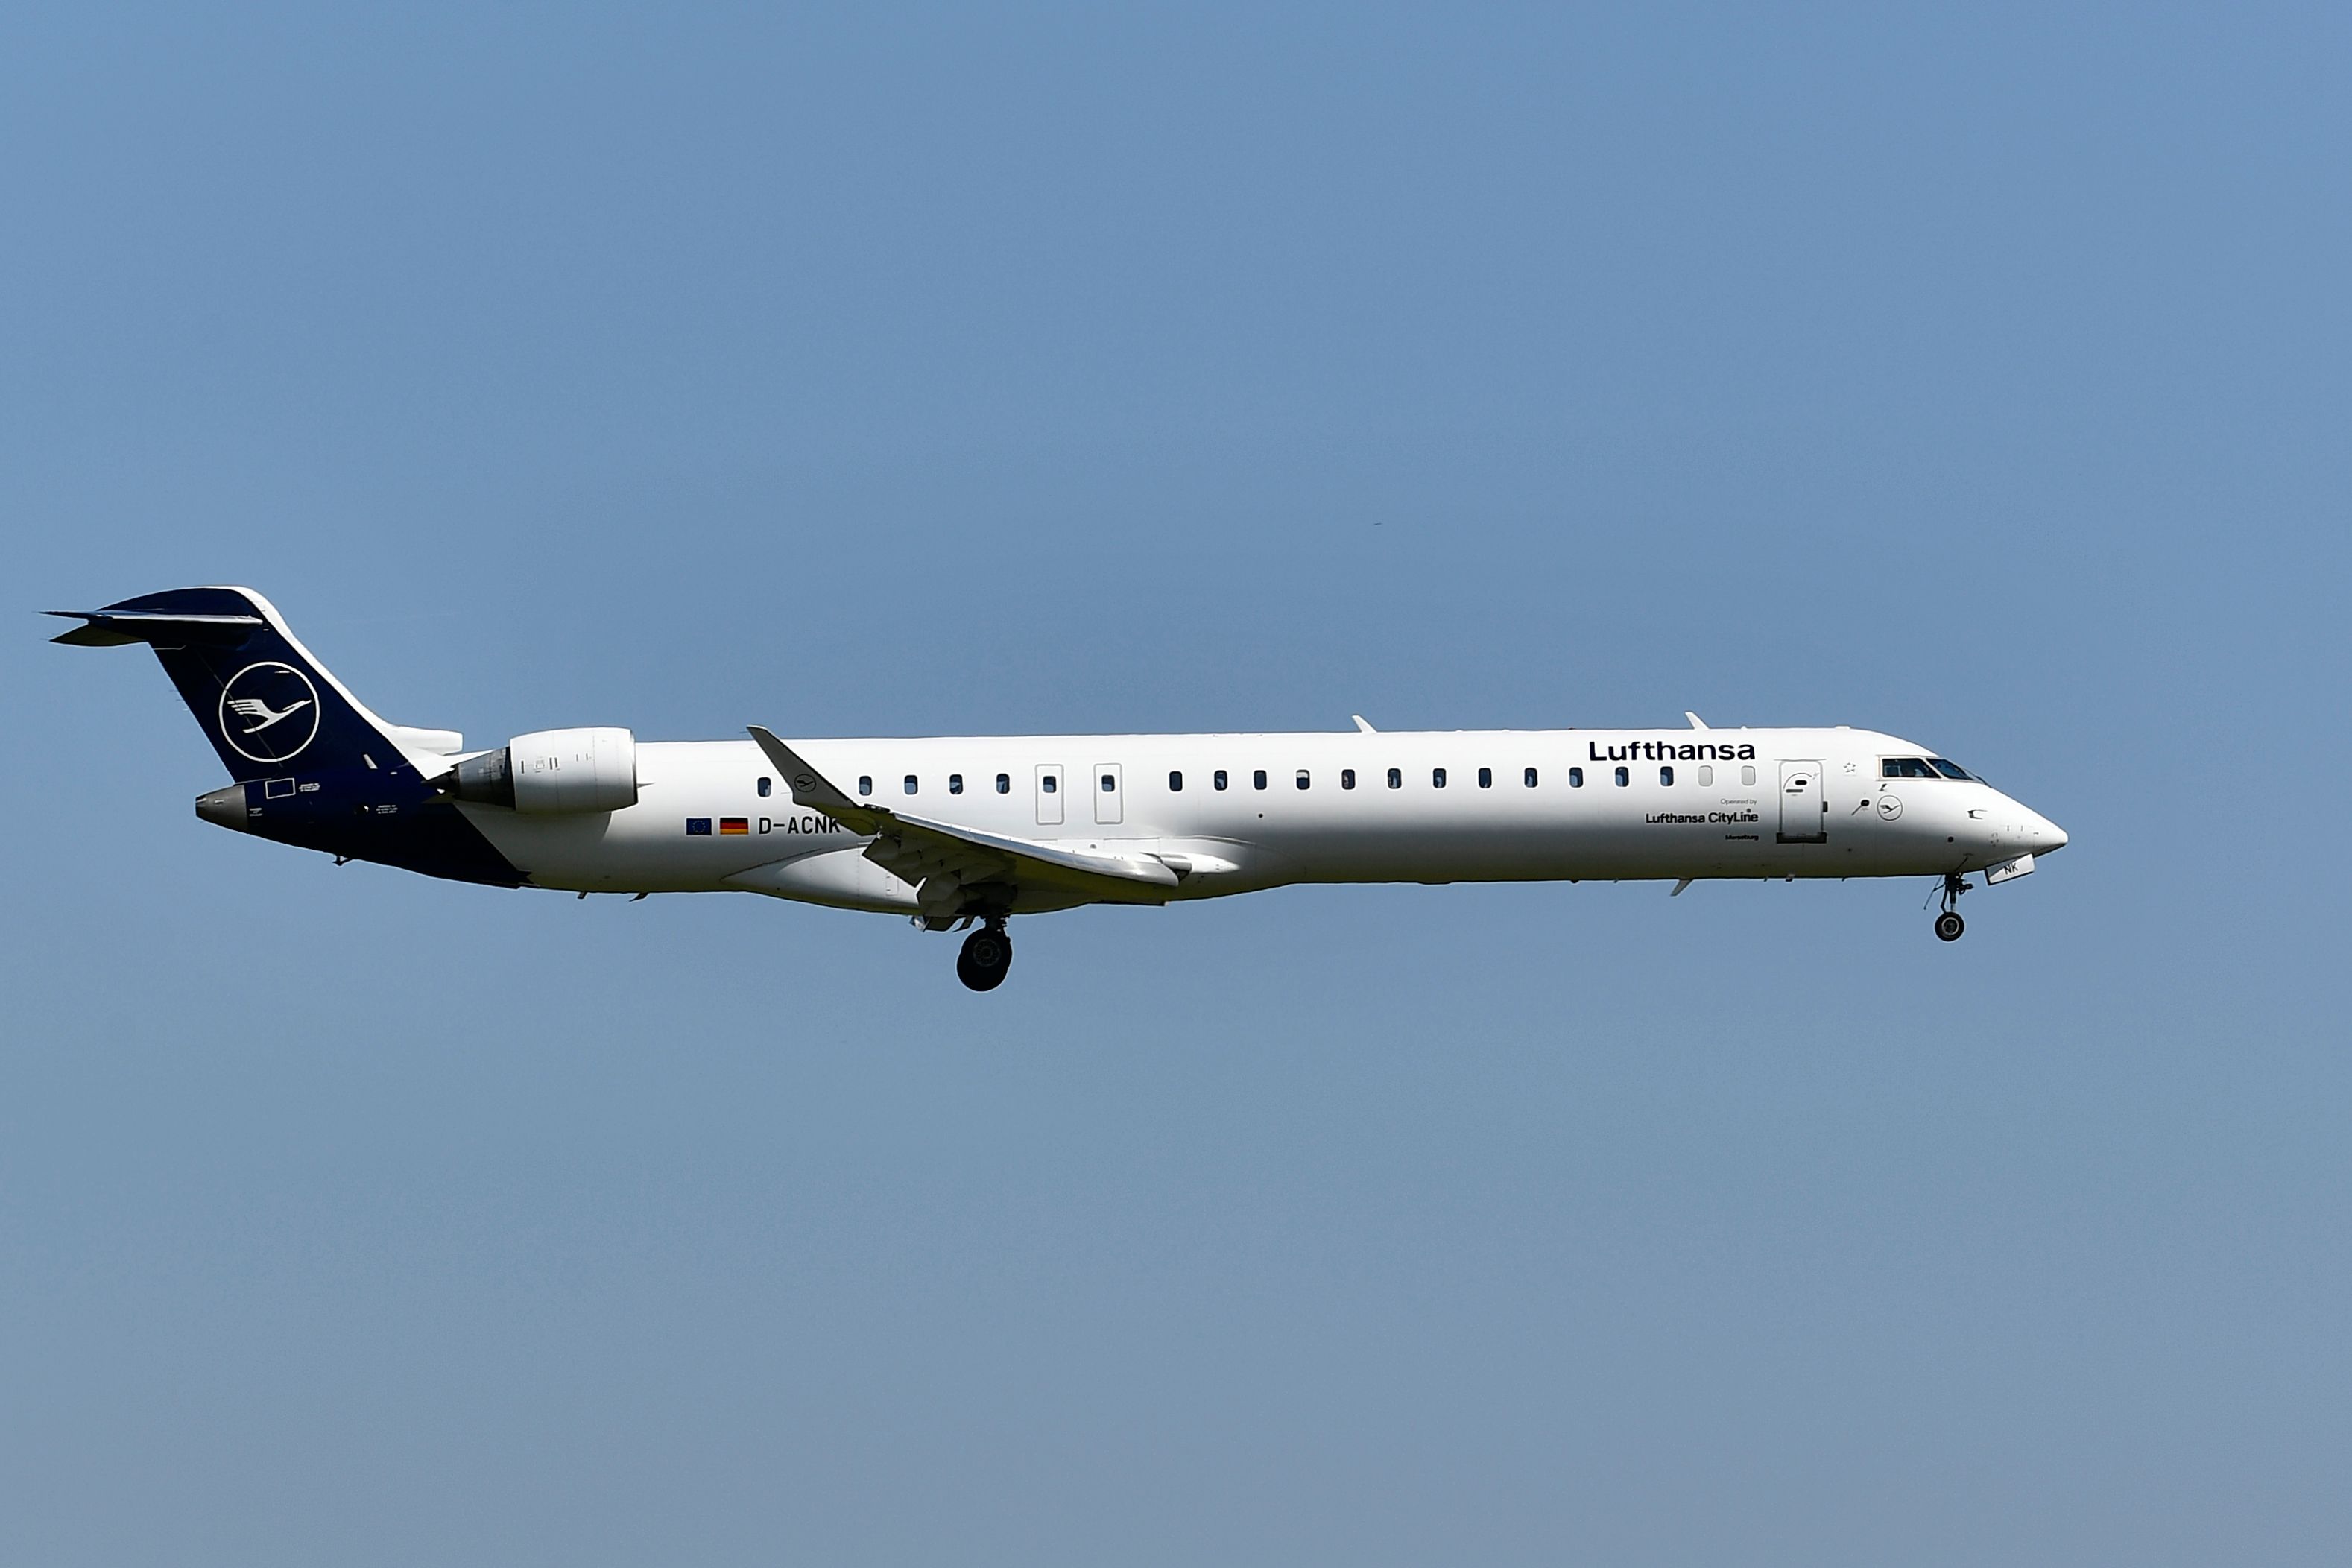 A Lufthansa CityLine CRJ900LR flying in the sky.